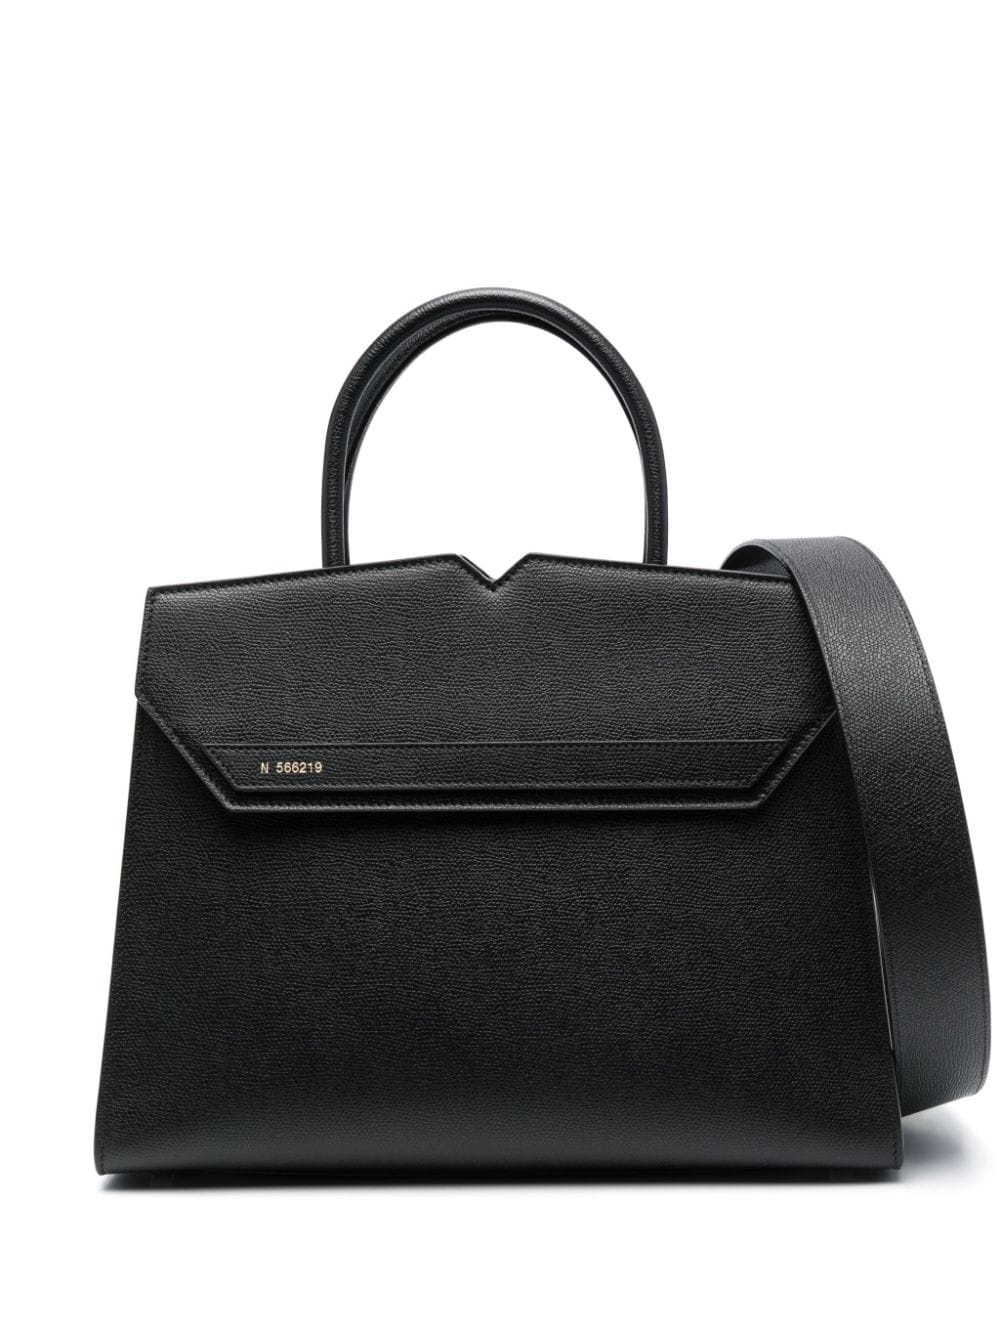 flap structured handbag - 1